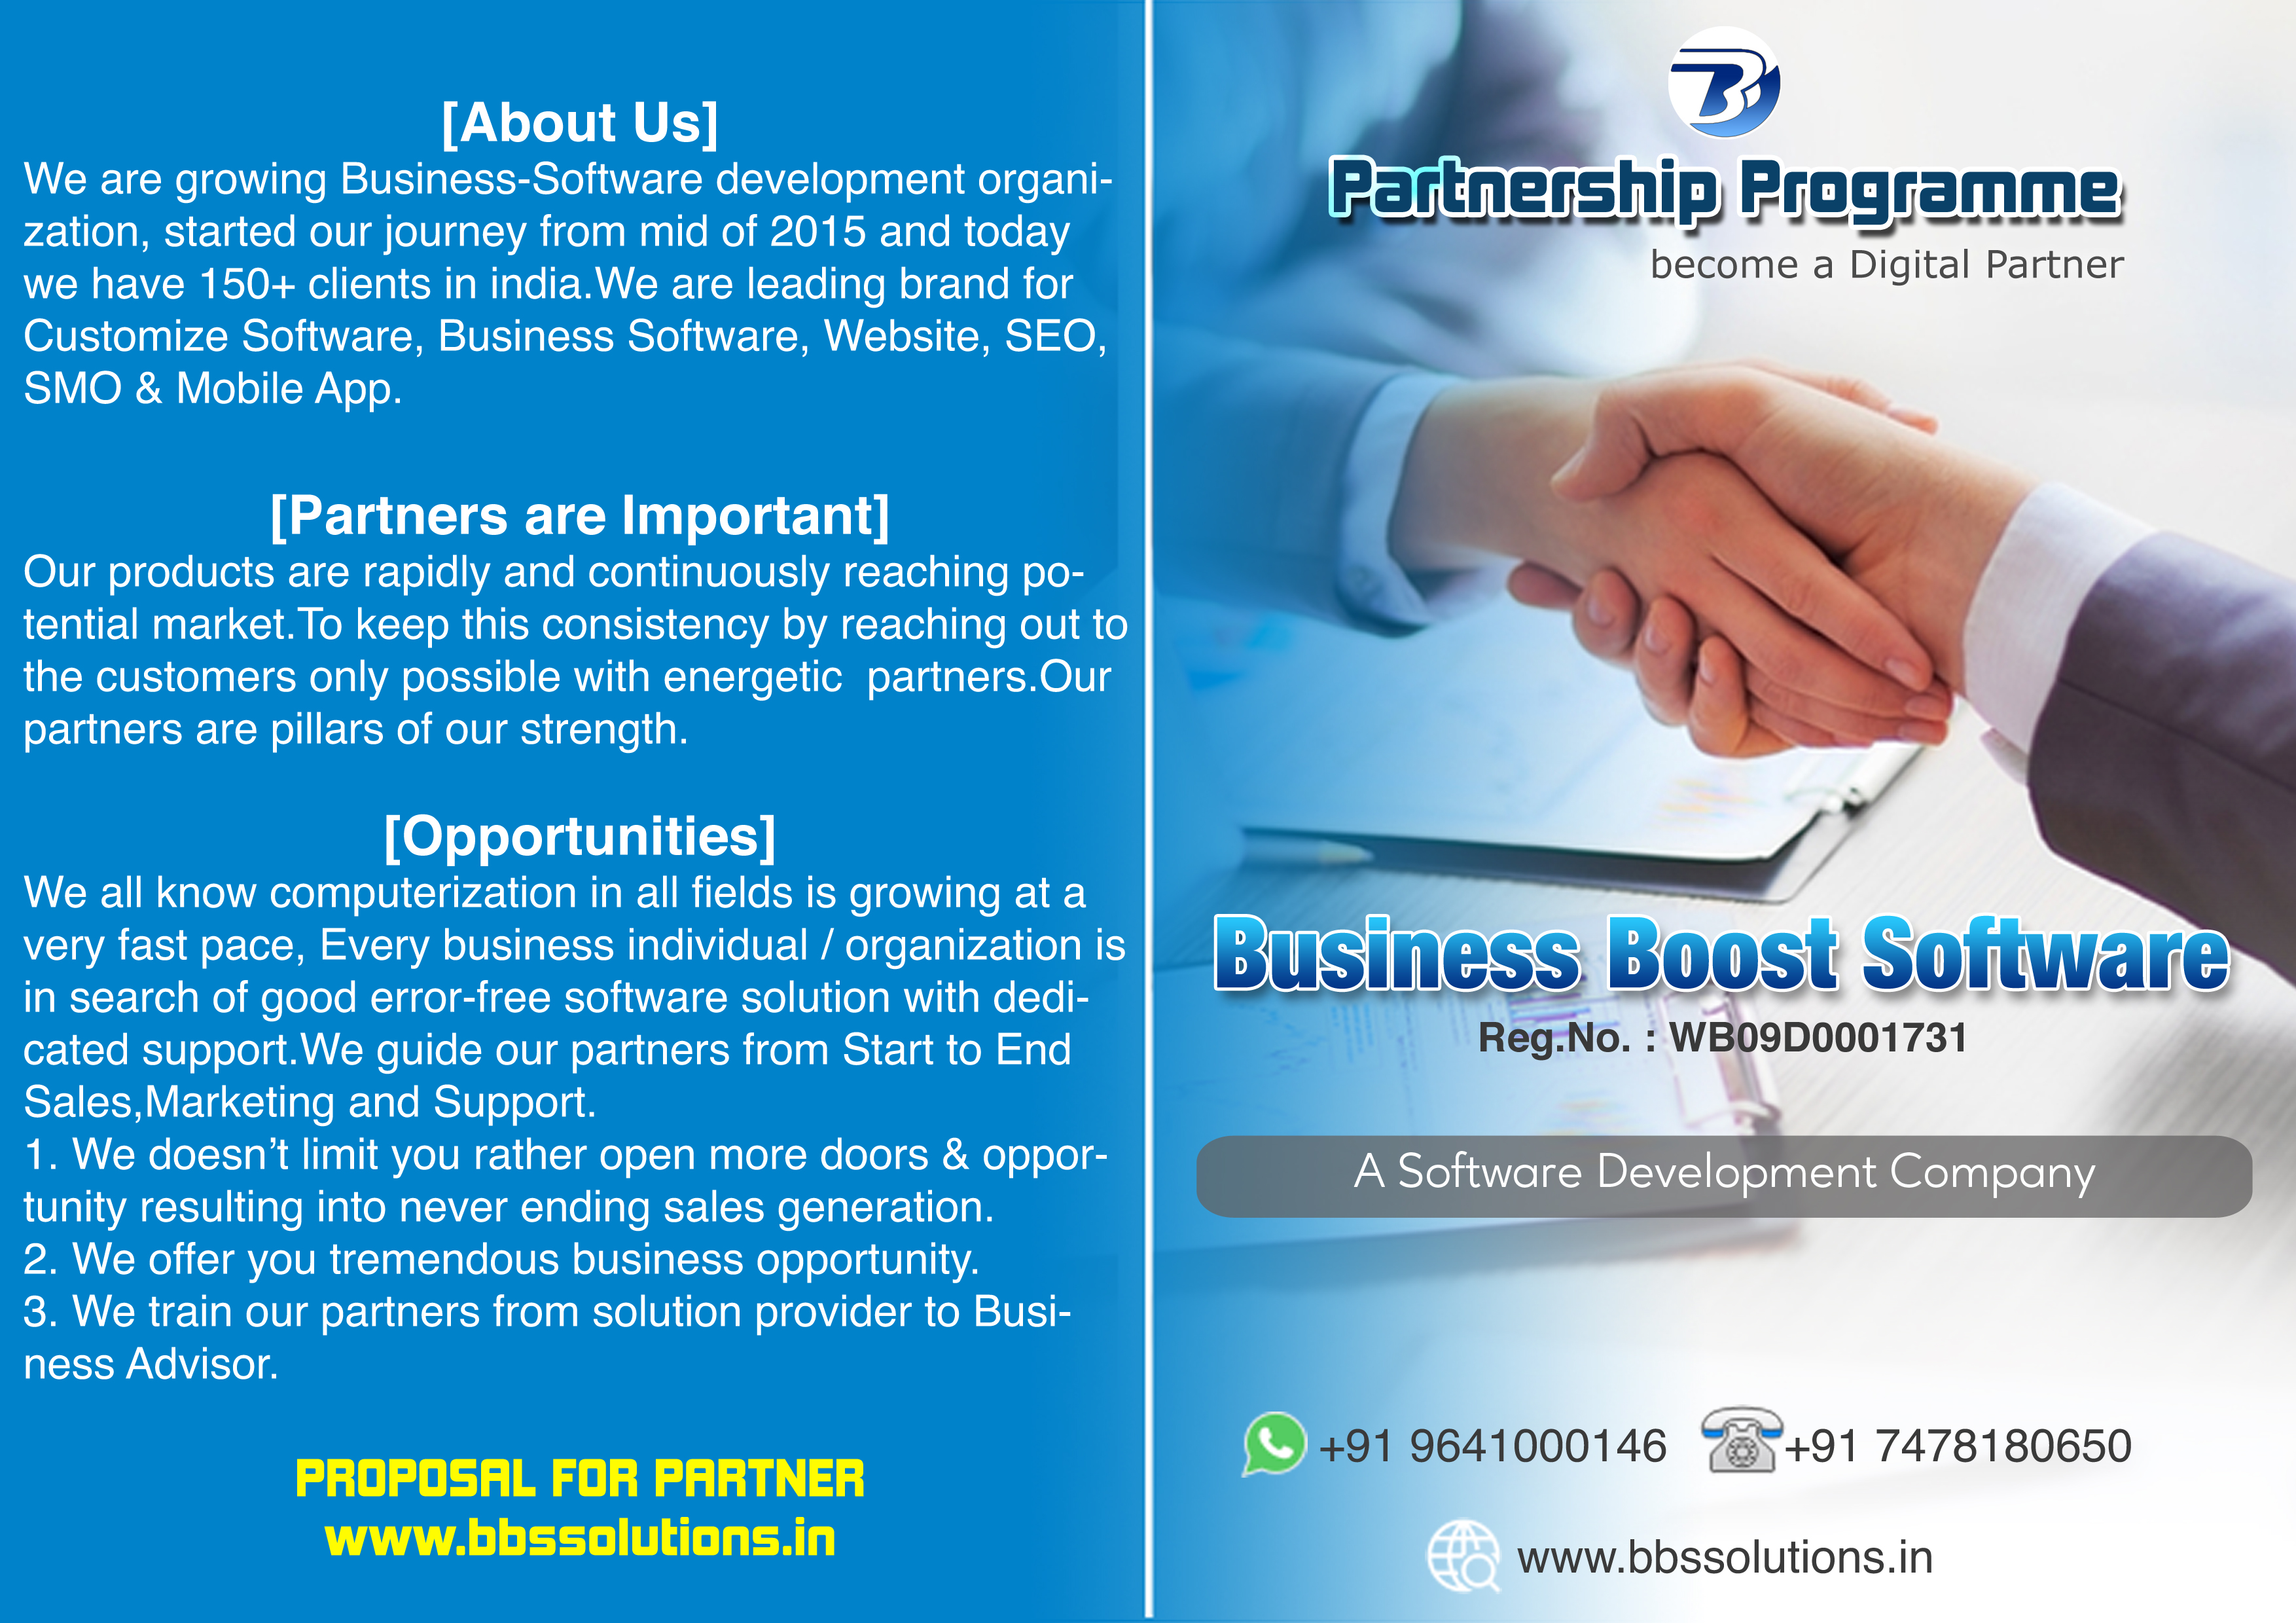 business boost software solutions Digital Partner